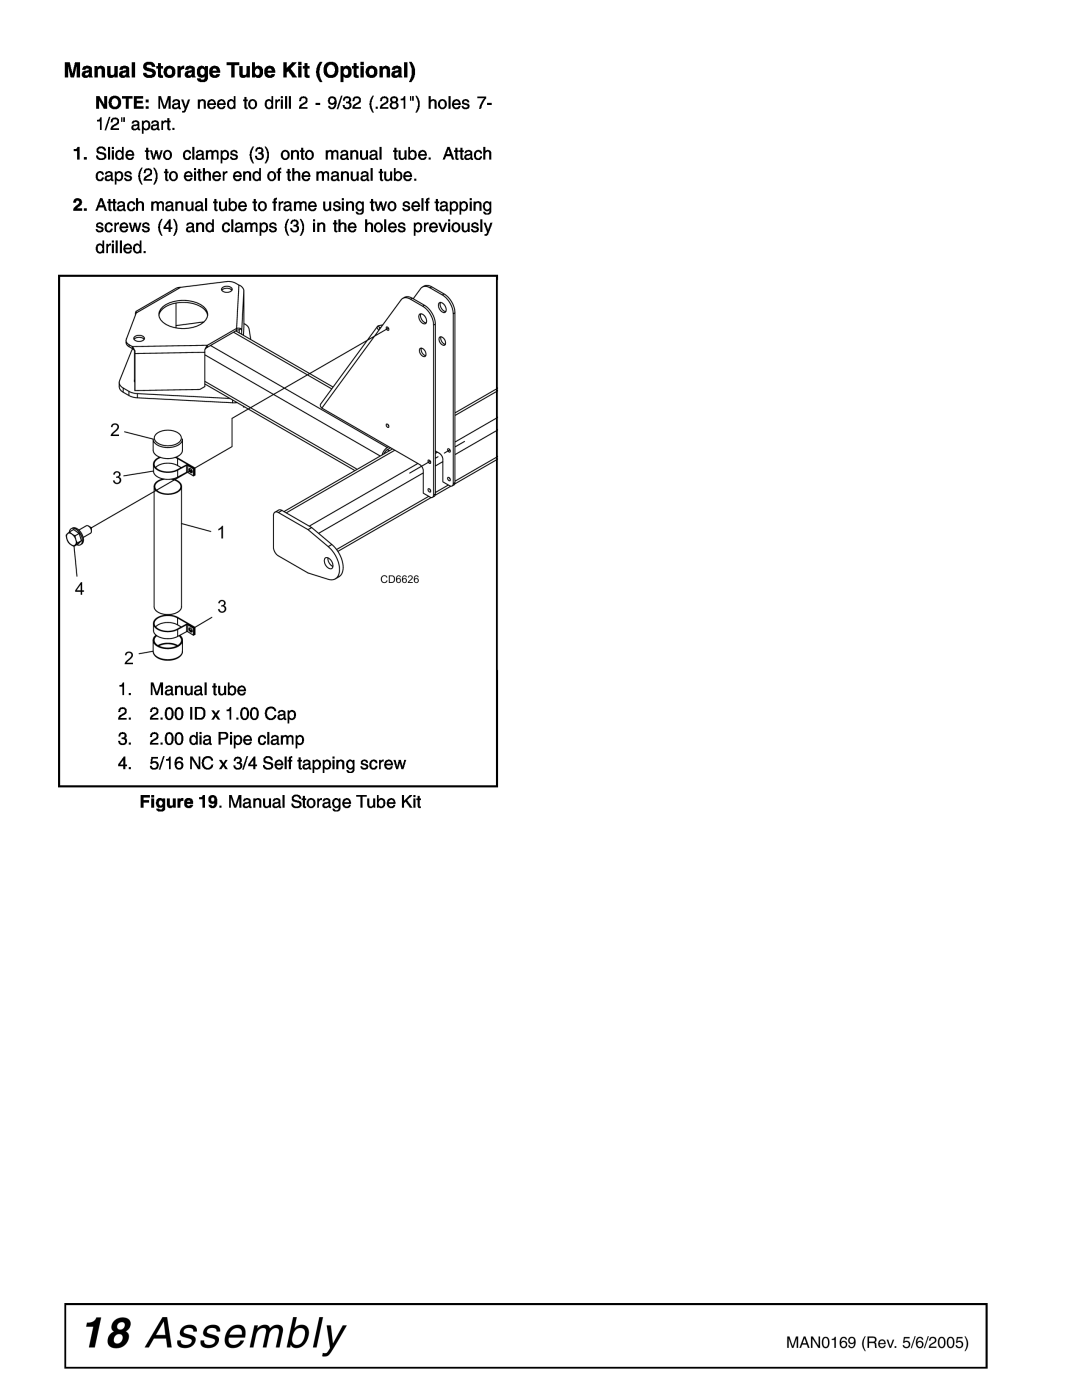 Woods Equipment RBC60 LRC60 manual Assembly, Manual Storage Tube Kit Optional 